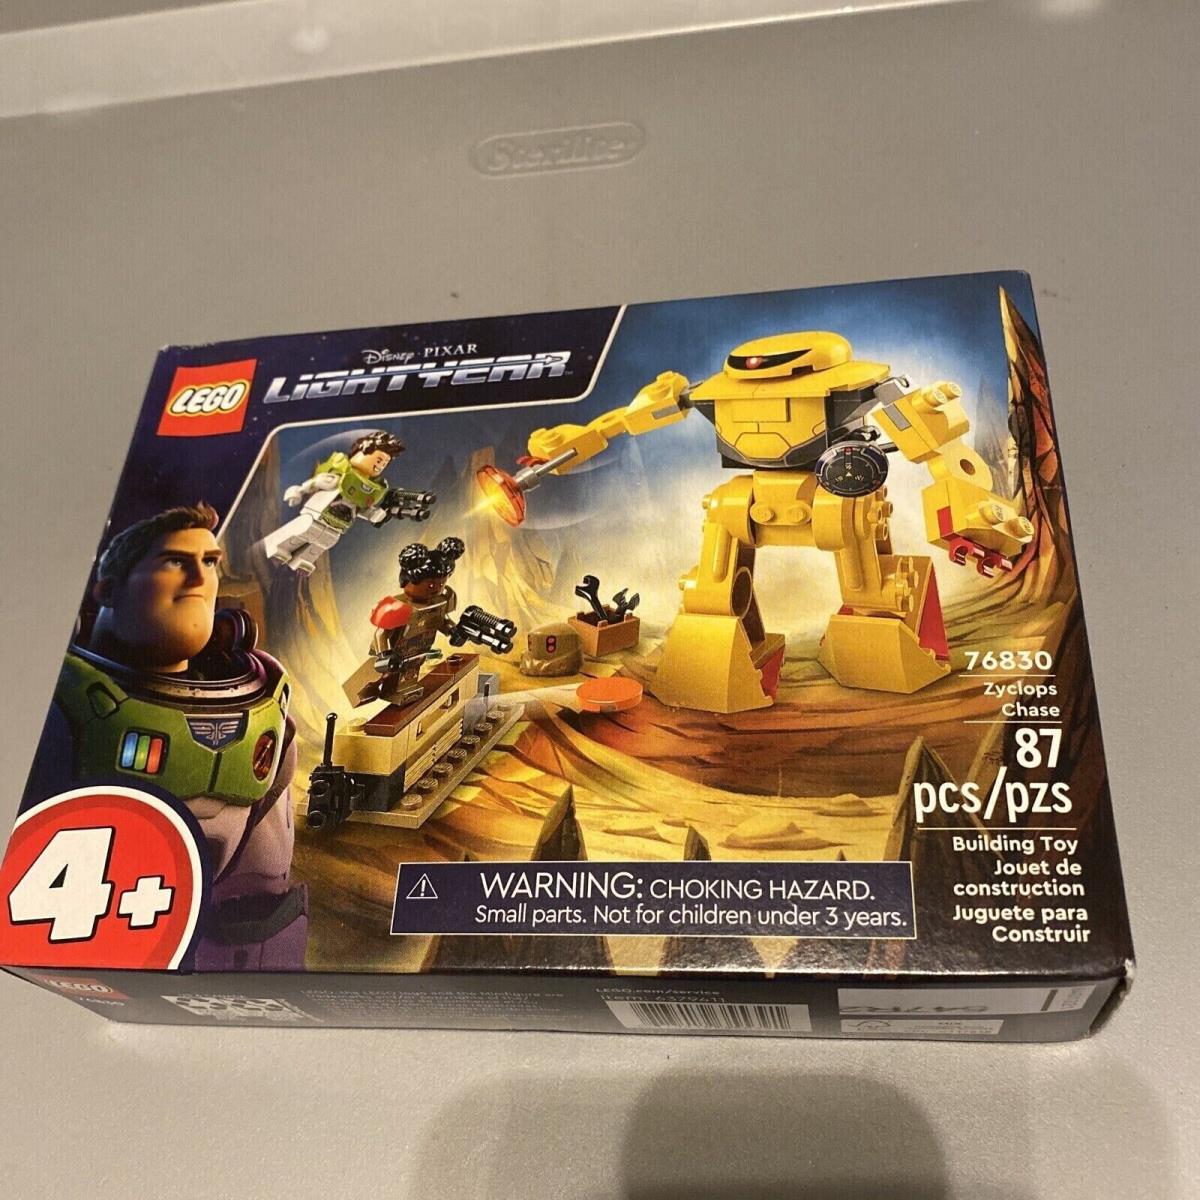 Lego Disney: Zyclops Chase 76830